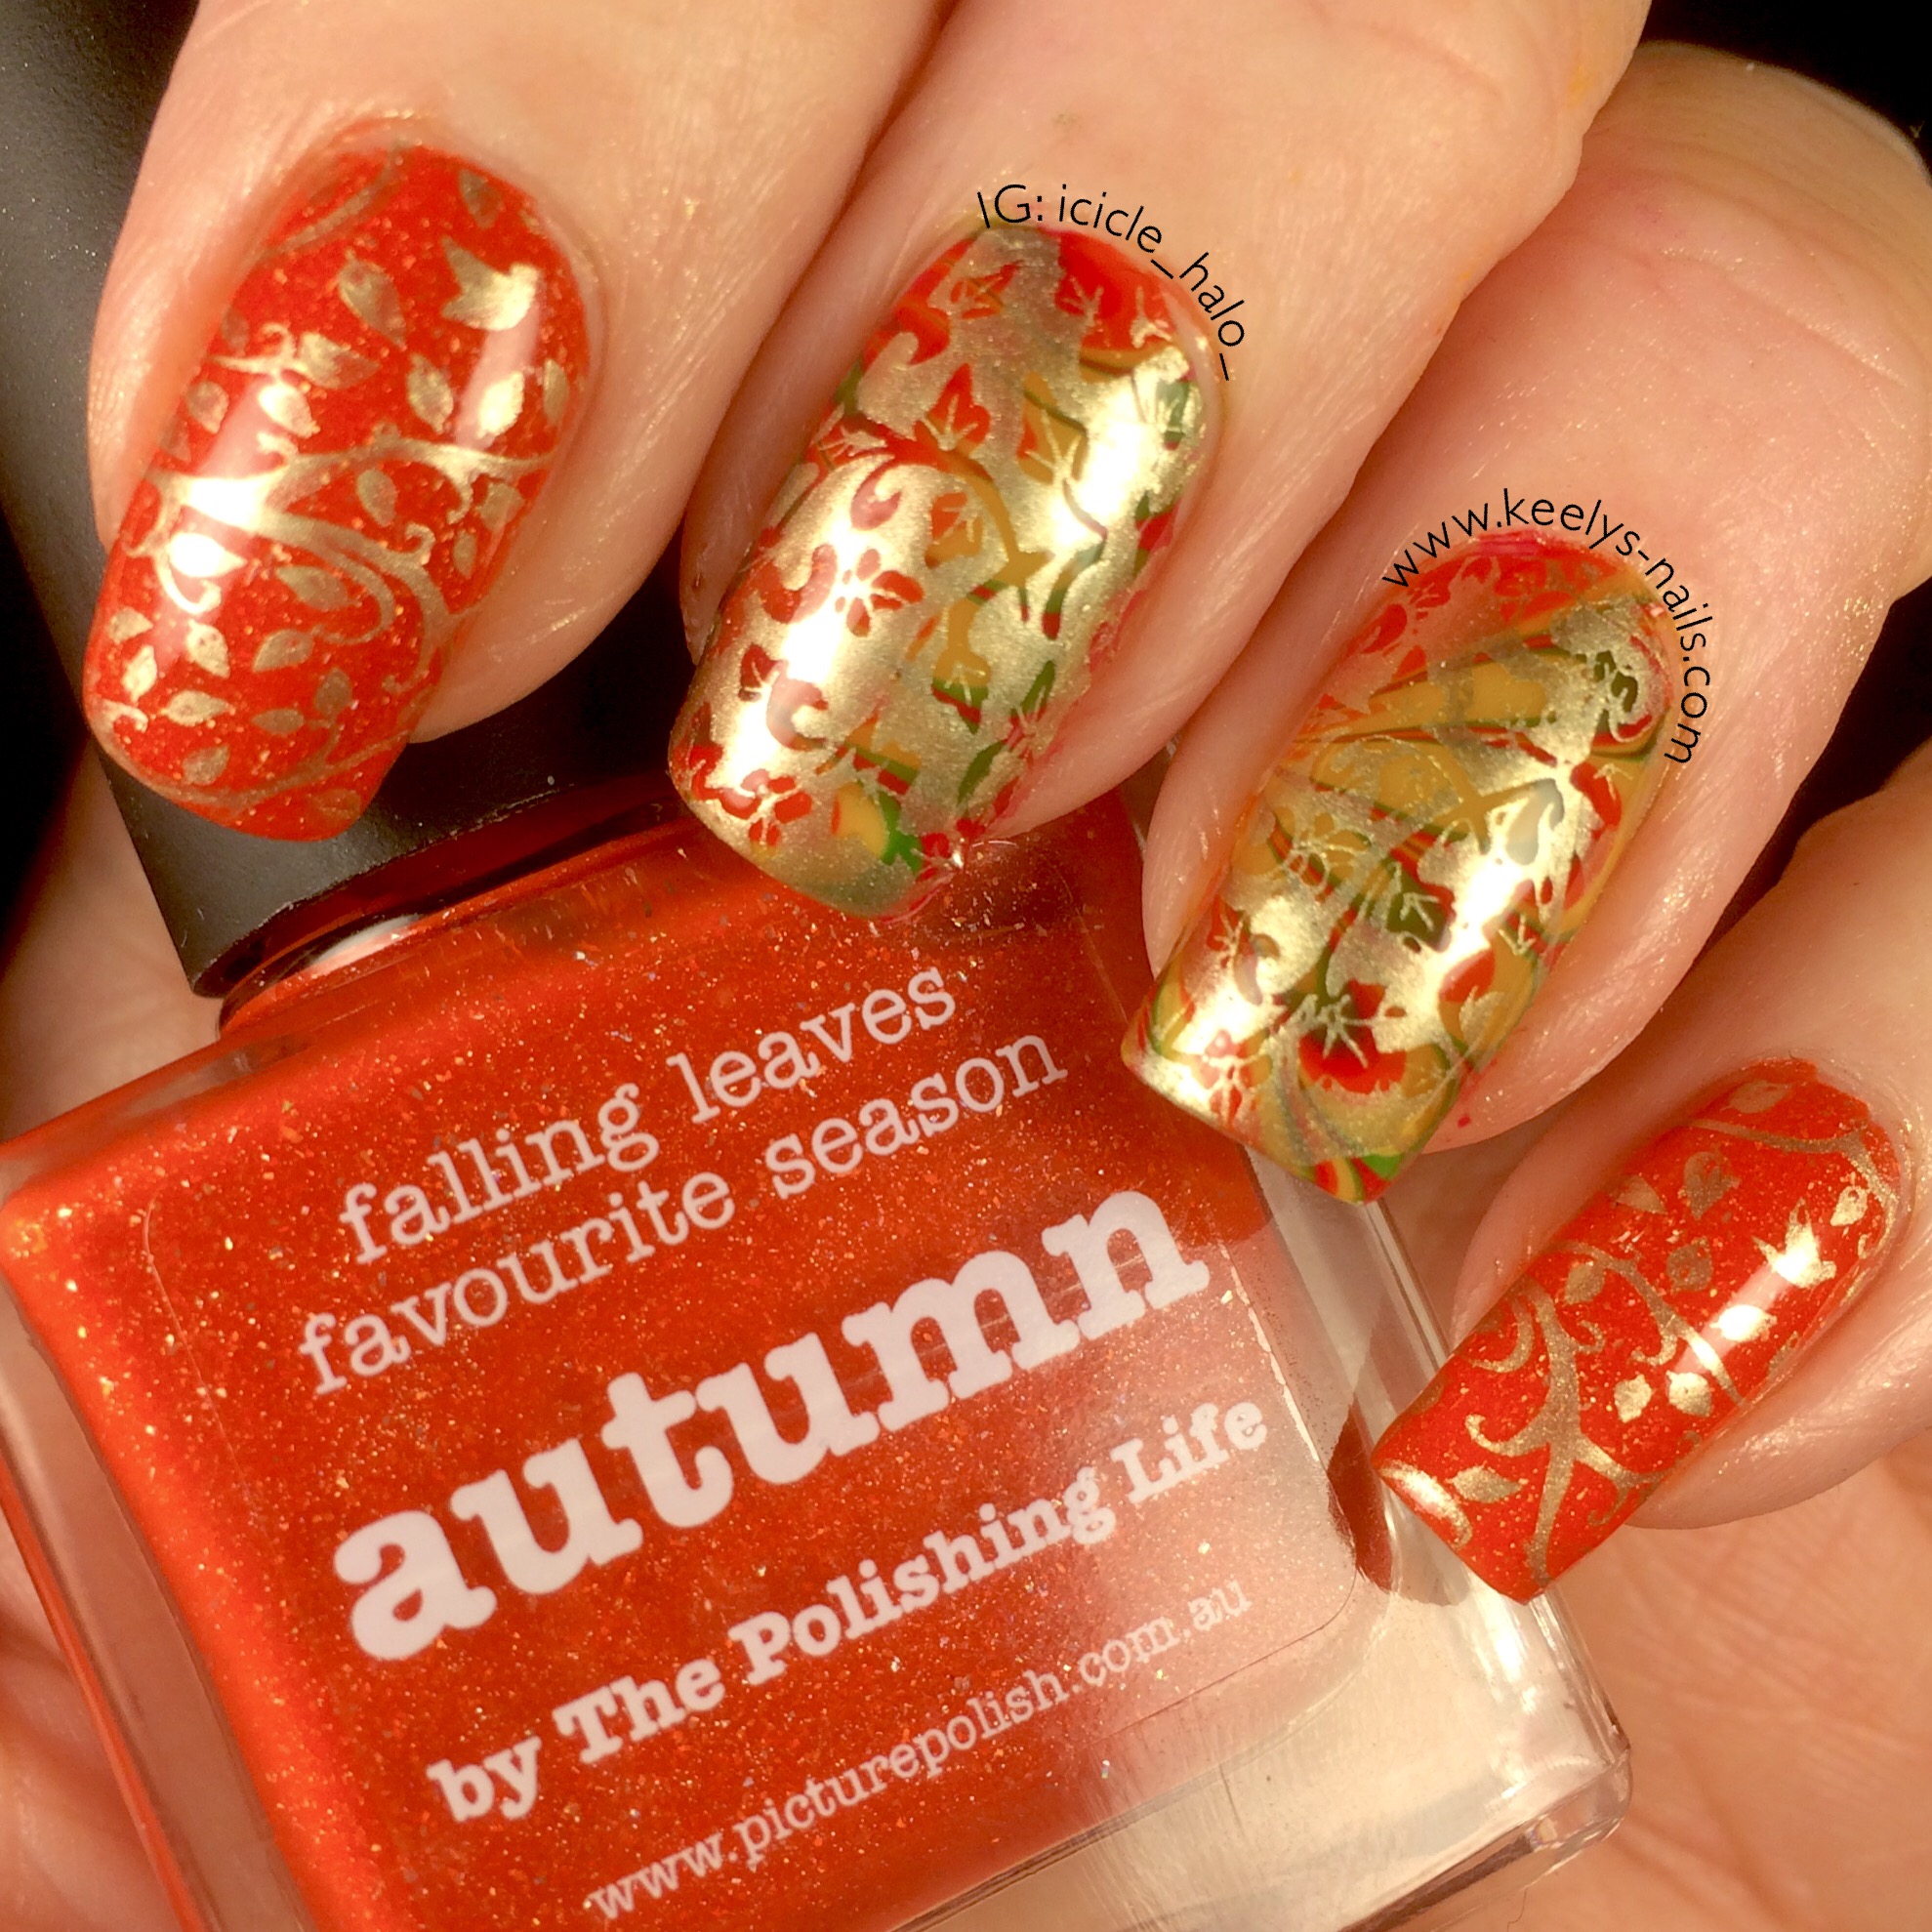 Autumn Equinox nail art designs | Keely's Nails